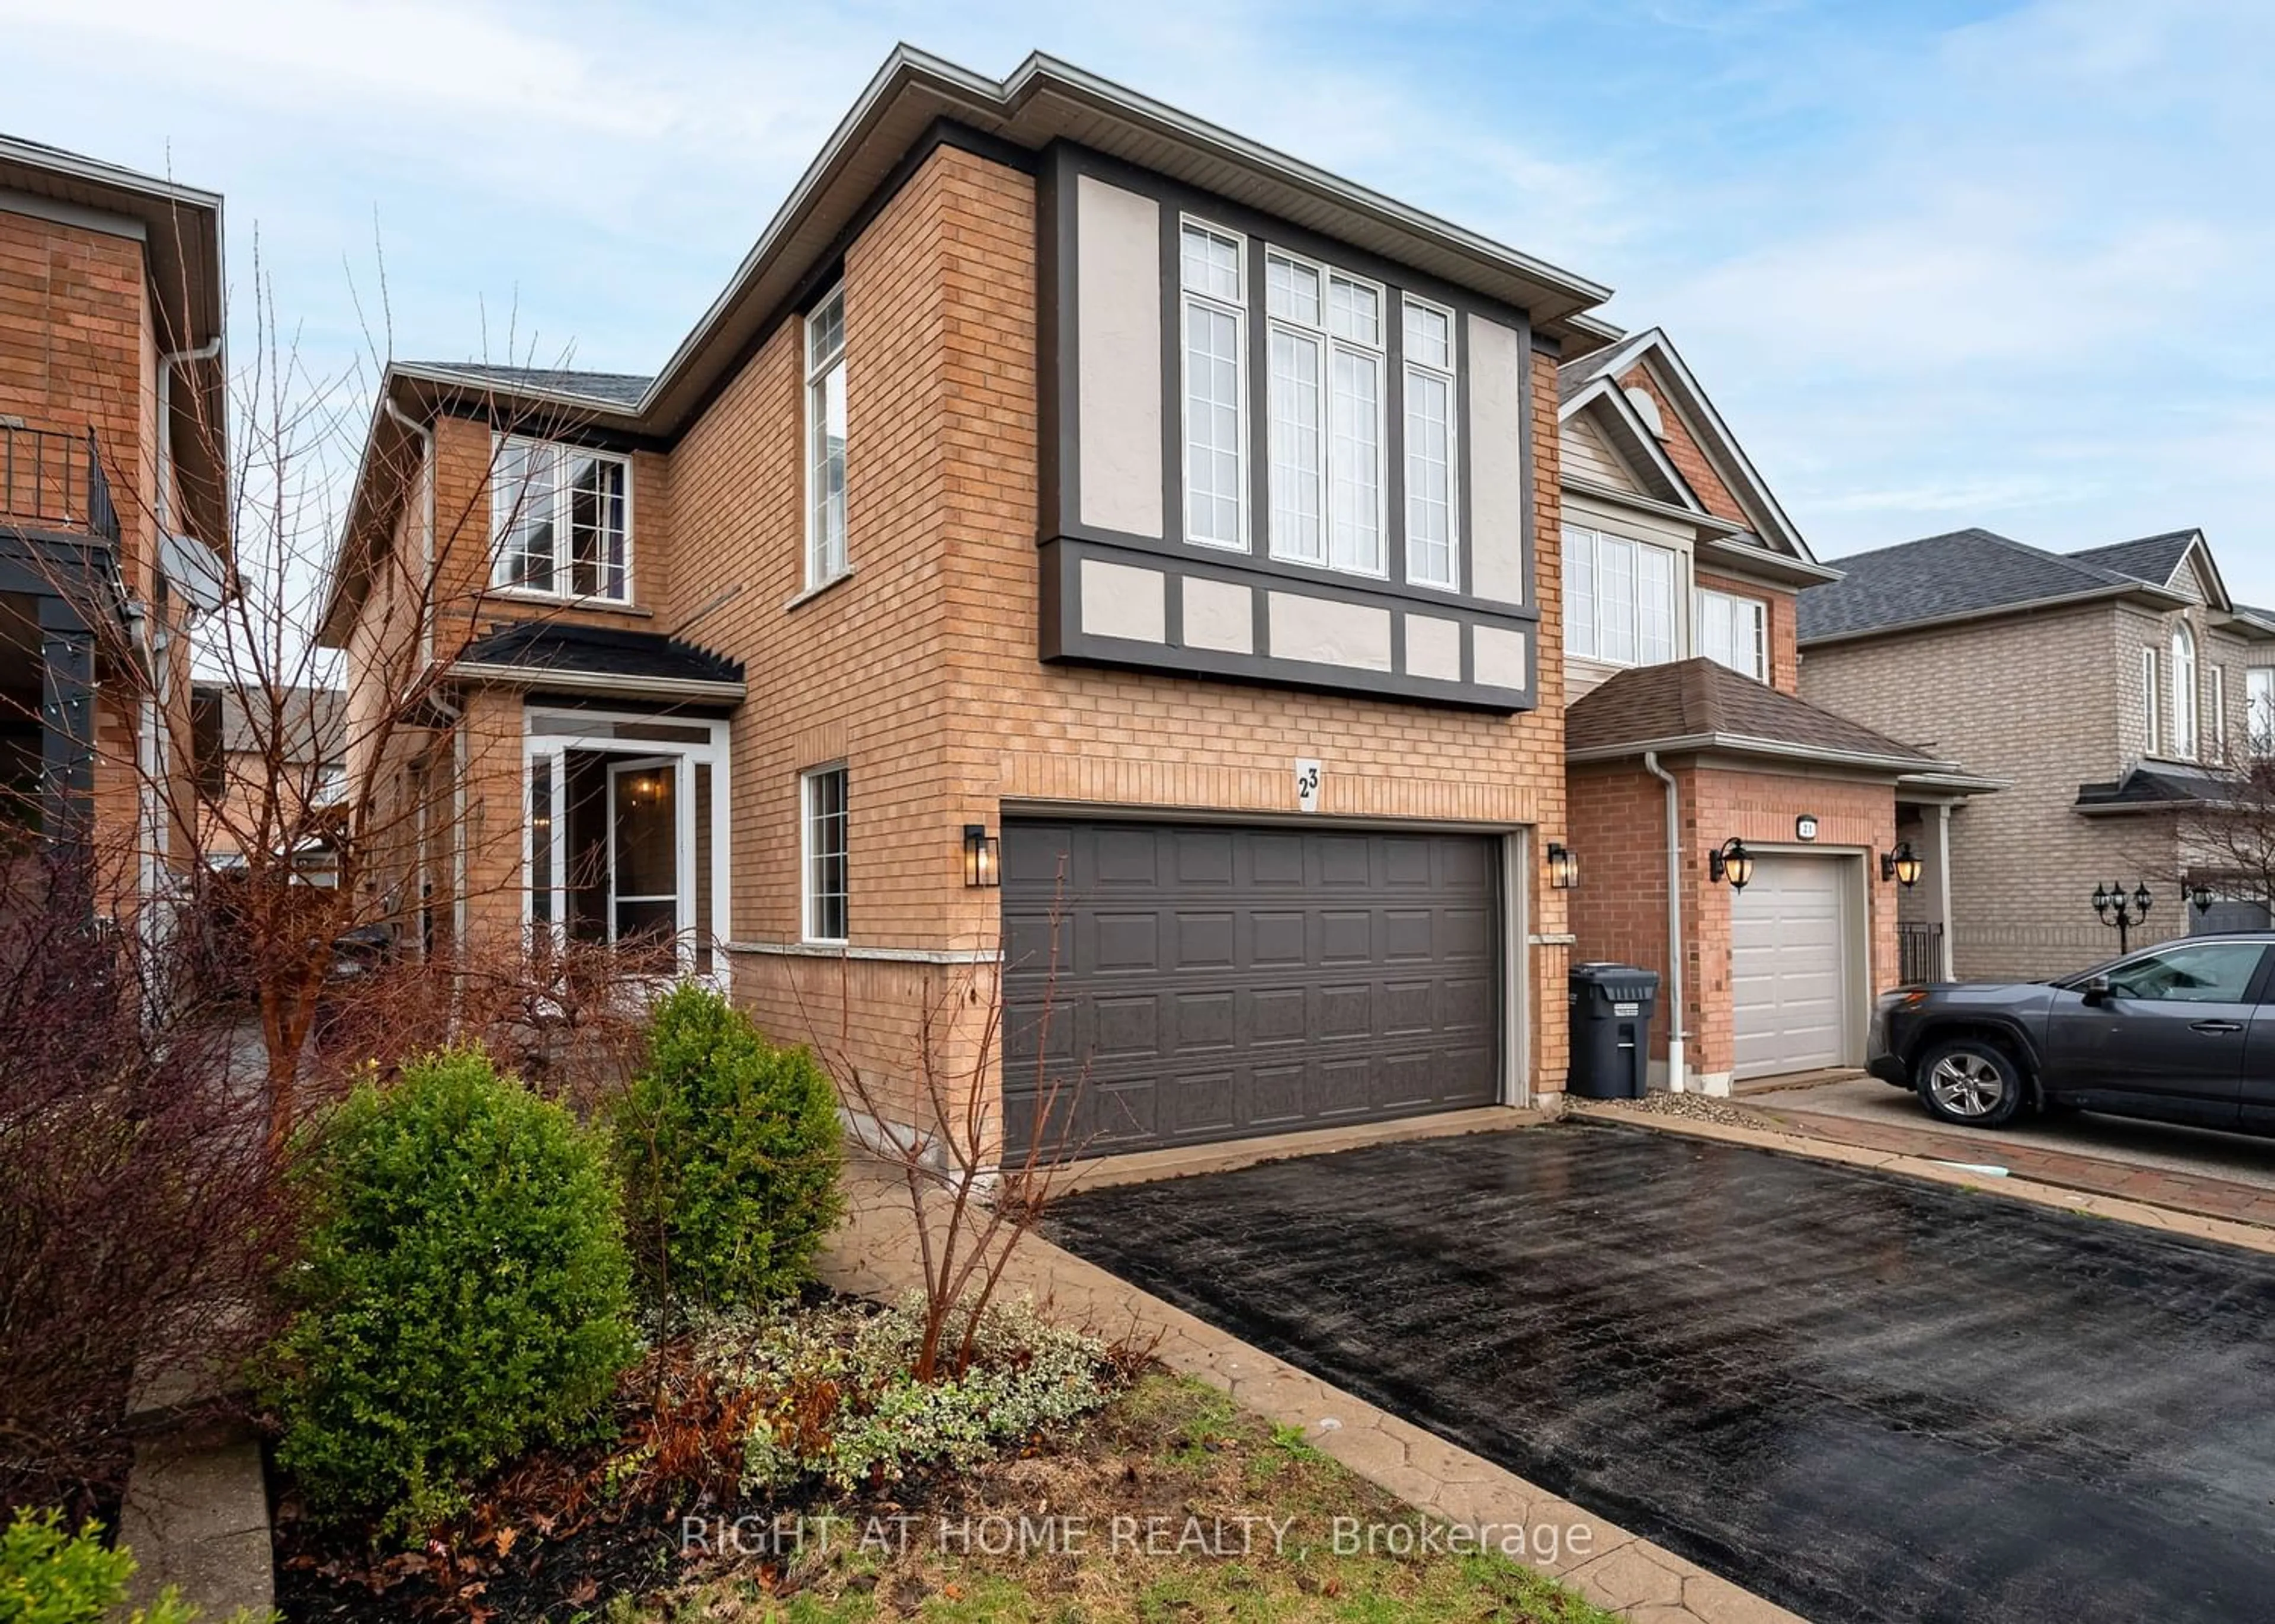 Home with brick exterior material for 23 Cedargrove Rd, Caledon Ontario L7E 2L7